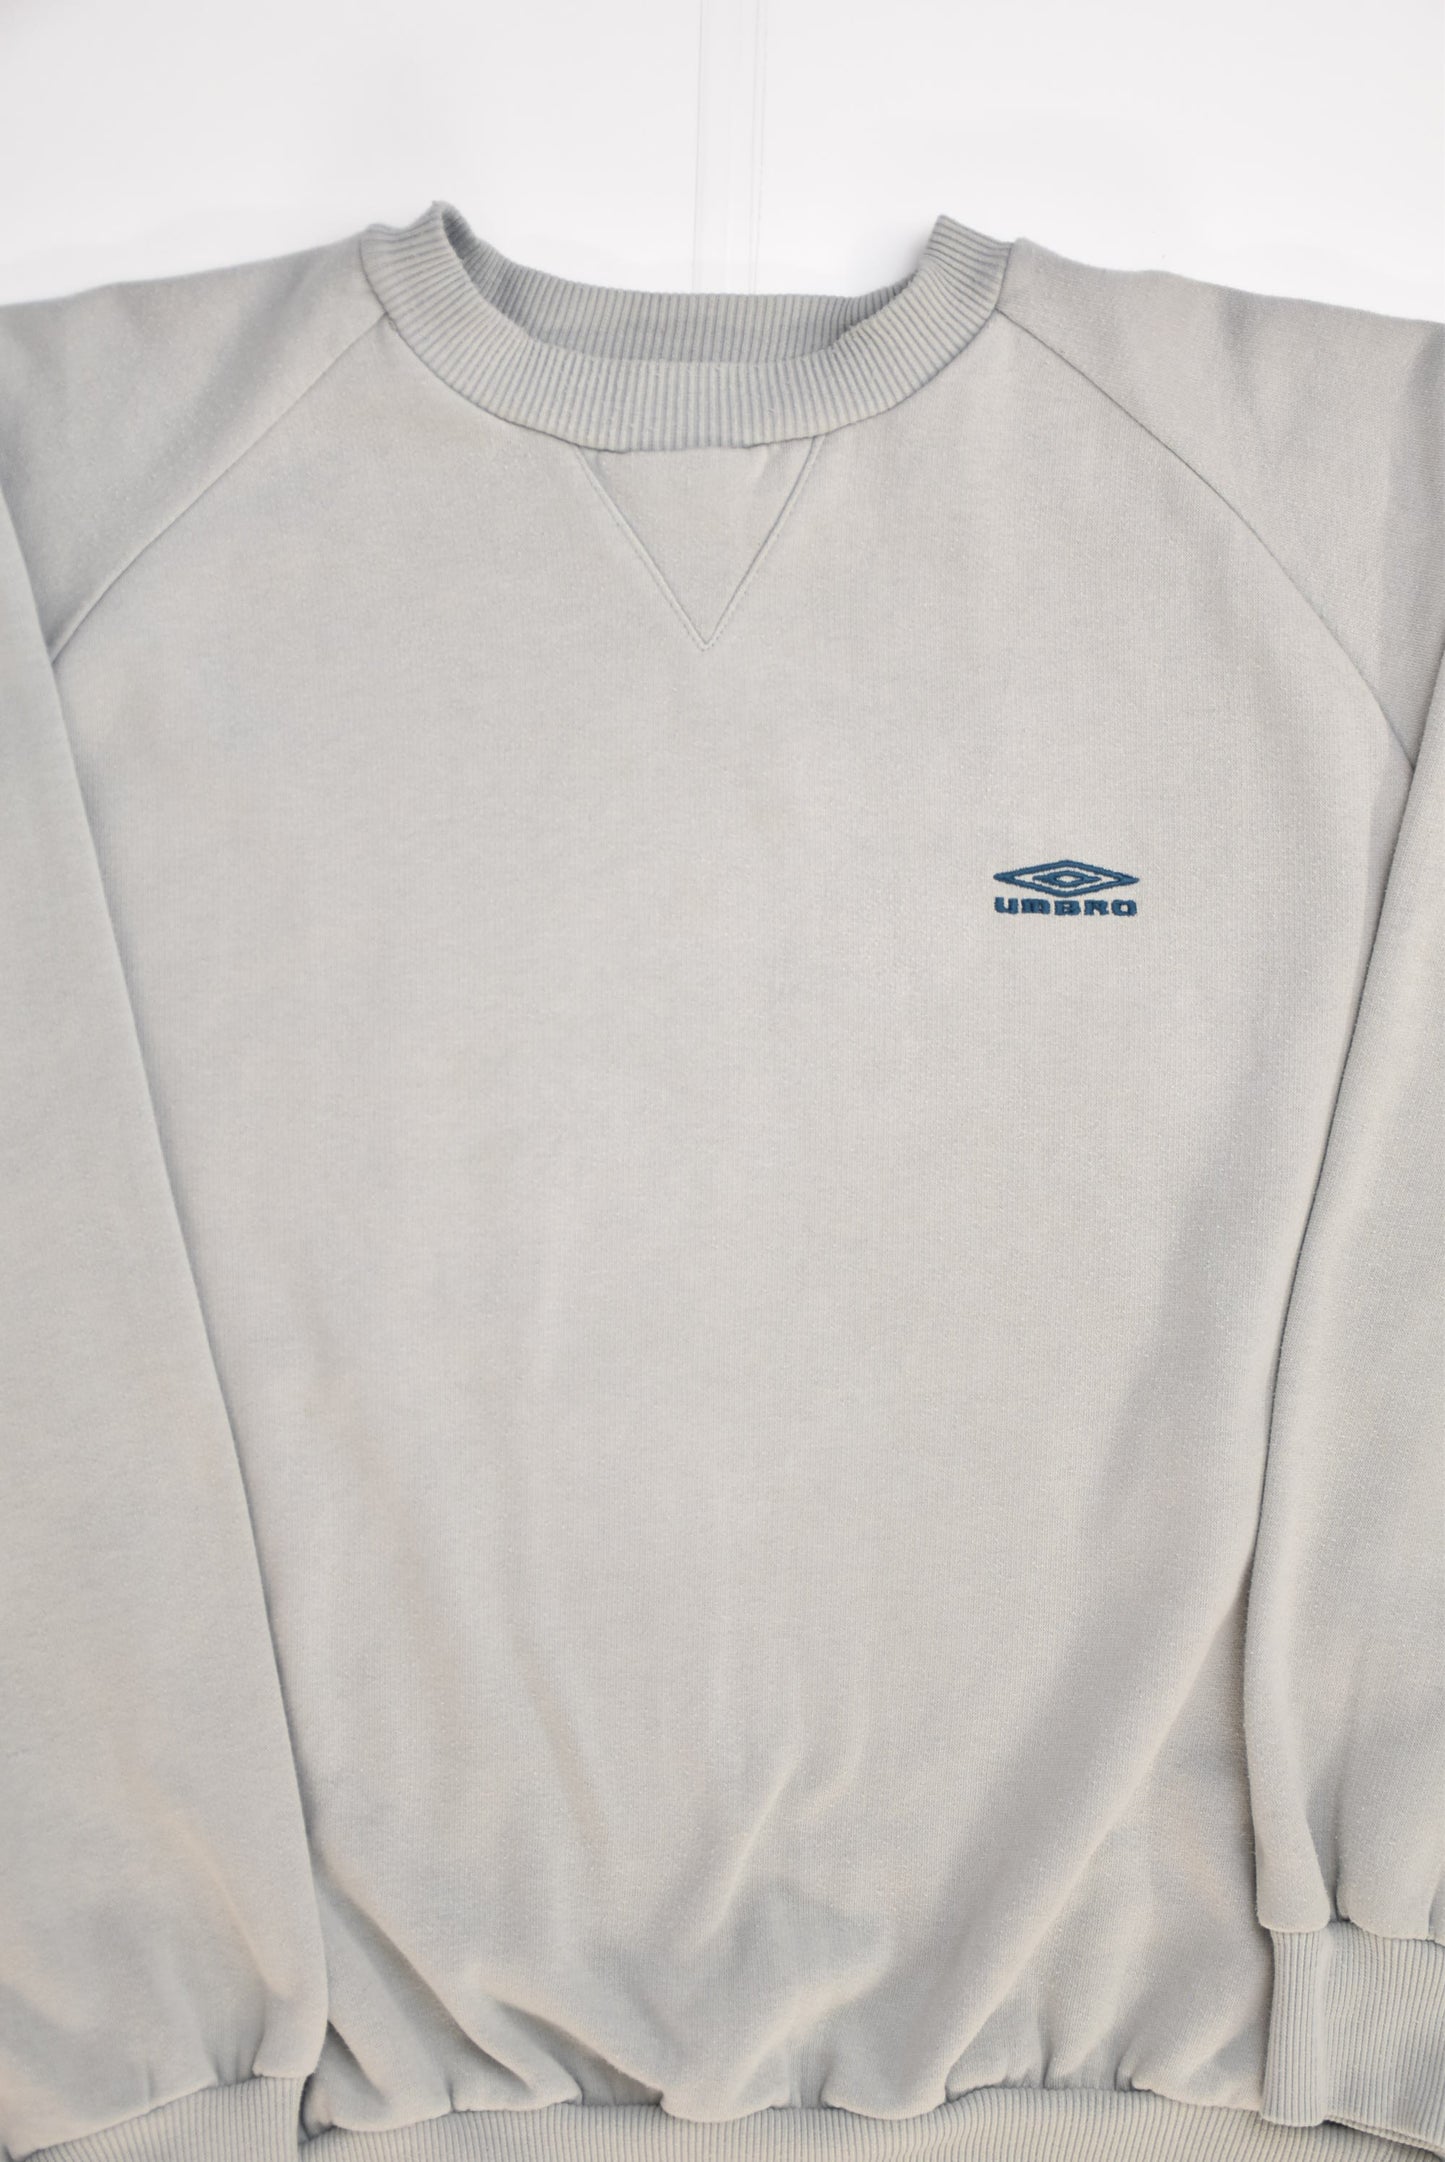 Umbro Sweatshirt (M/L)